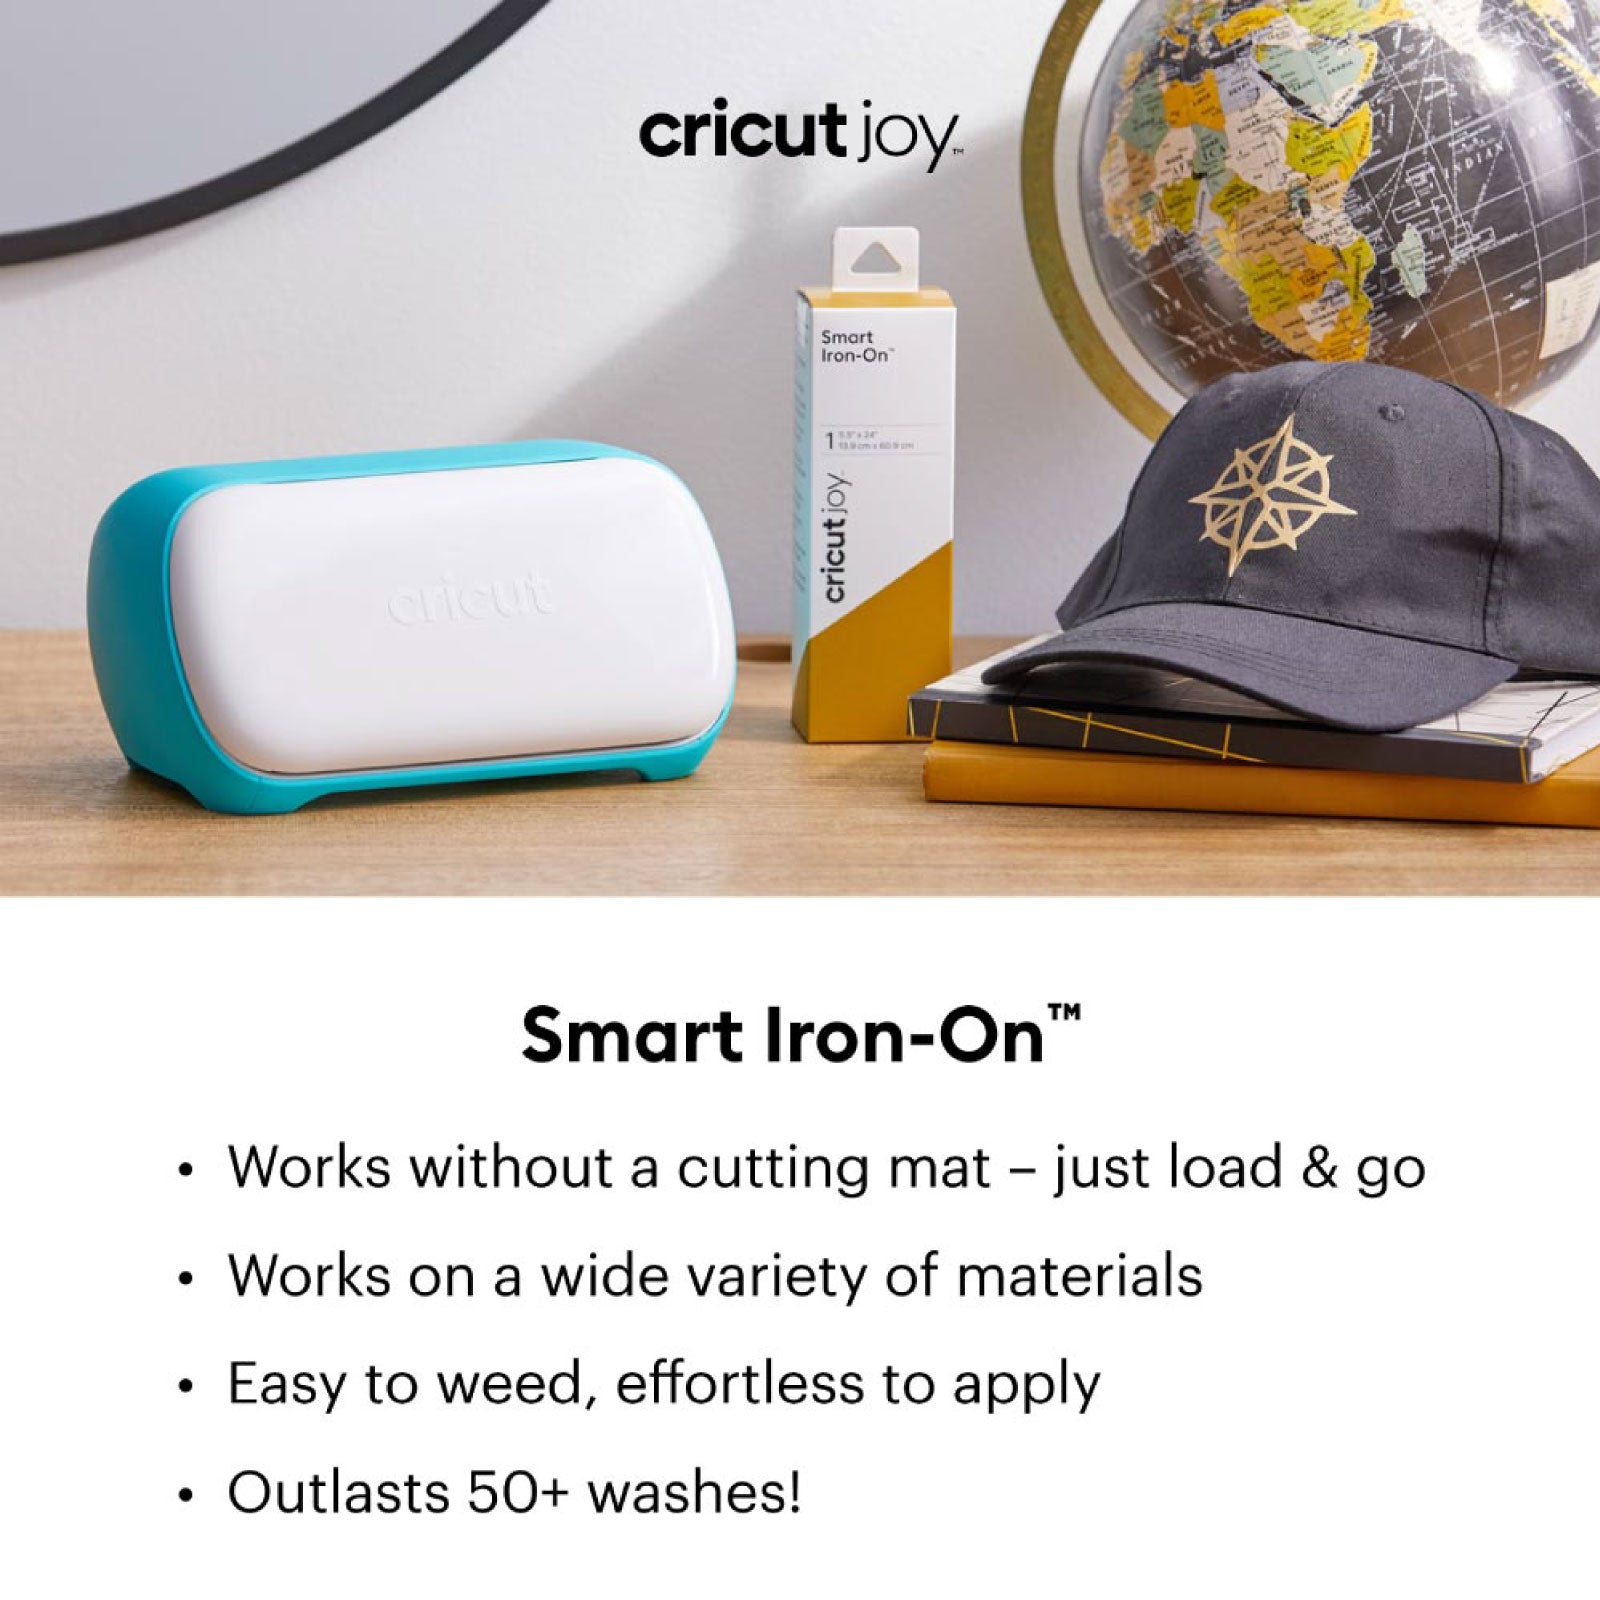 Cricut Joy Smart Iron On Cherry - Damaged Package